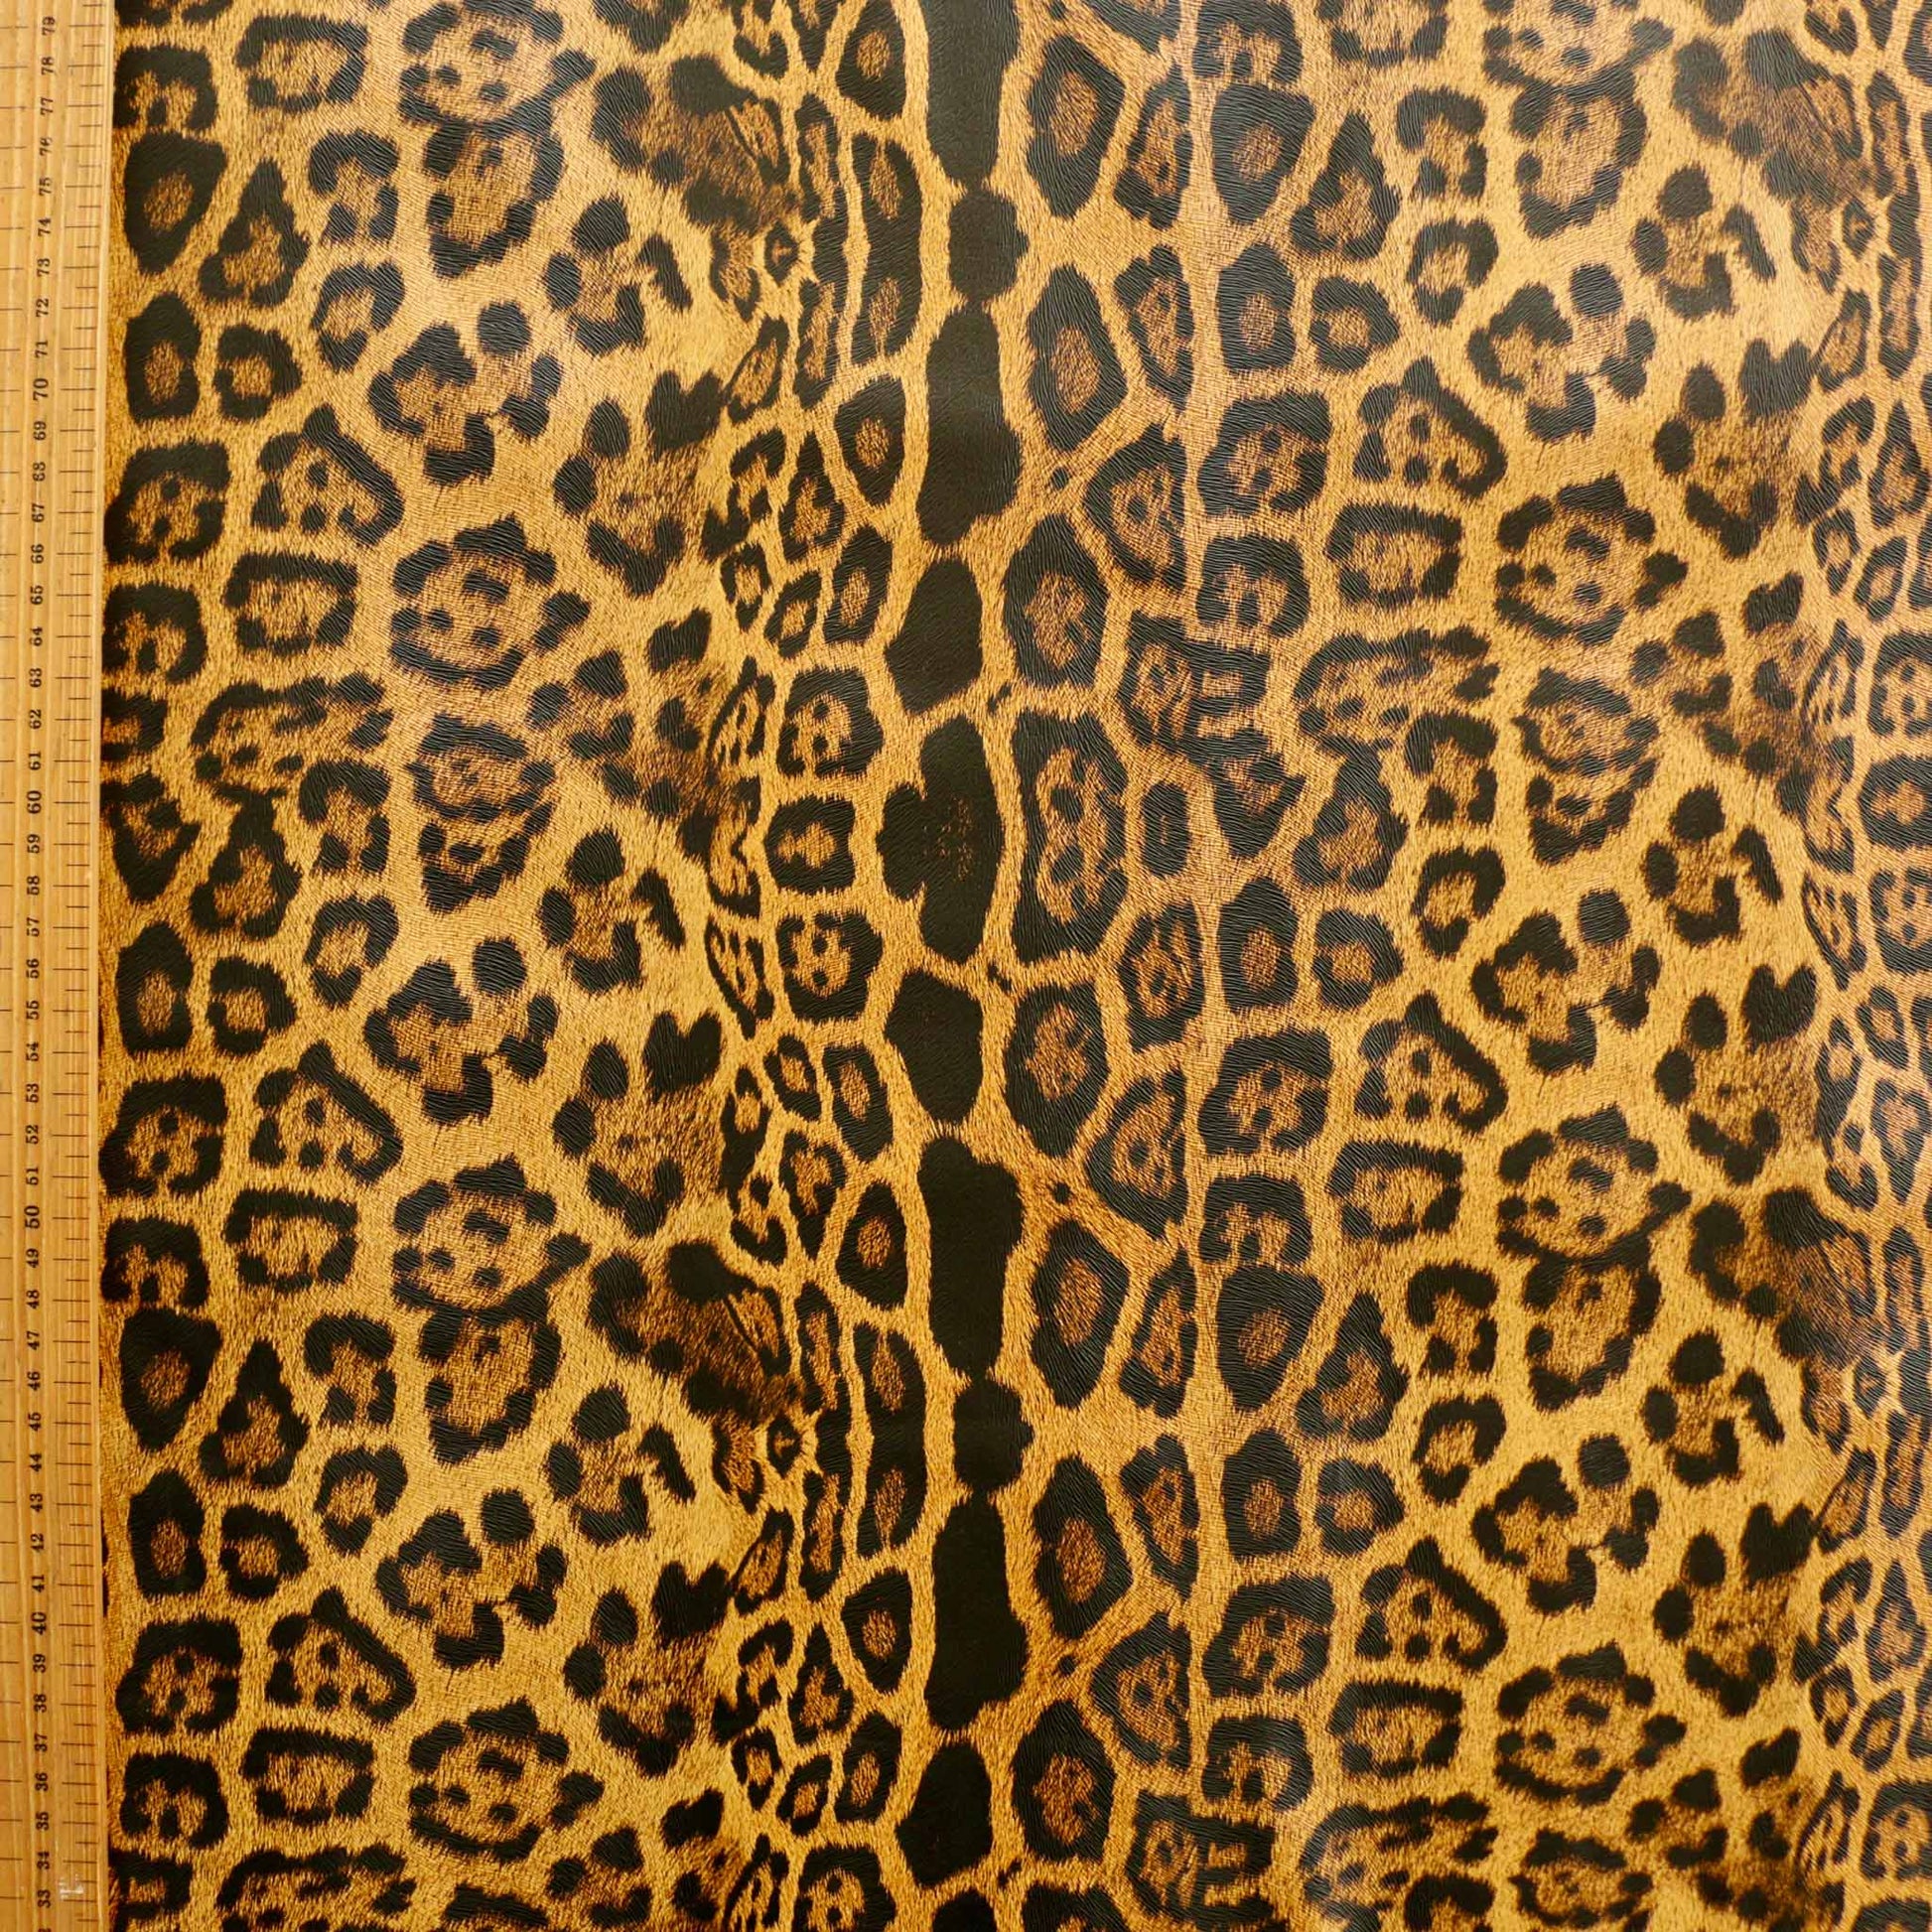 animal print jaguar skin orange and black pvc vinyl leatherette fabric for dressmaking